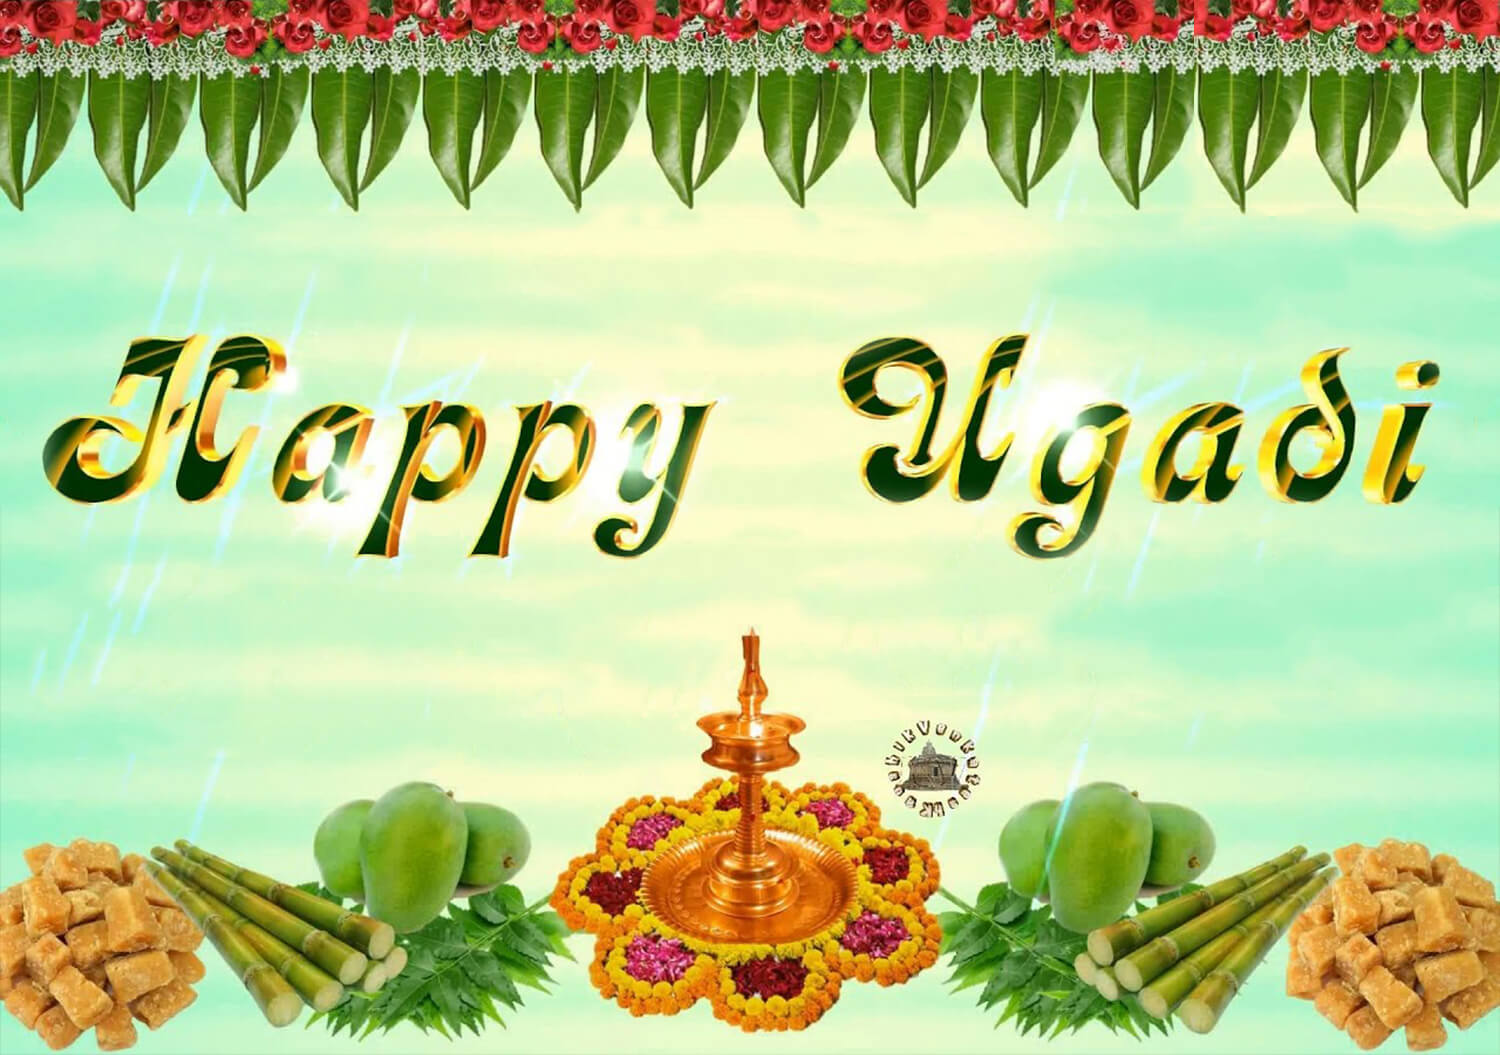 Happy Ugadi!